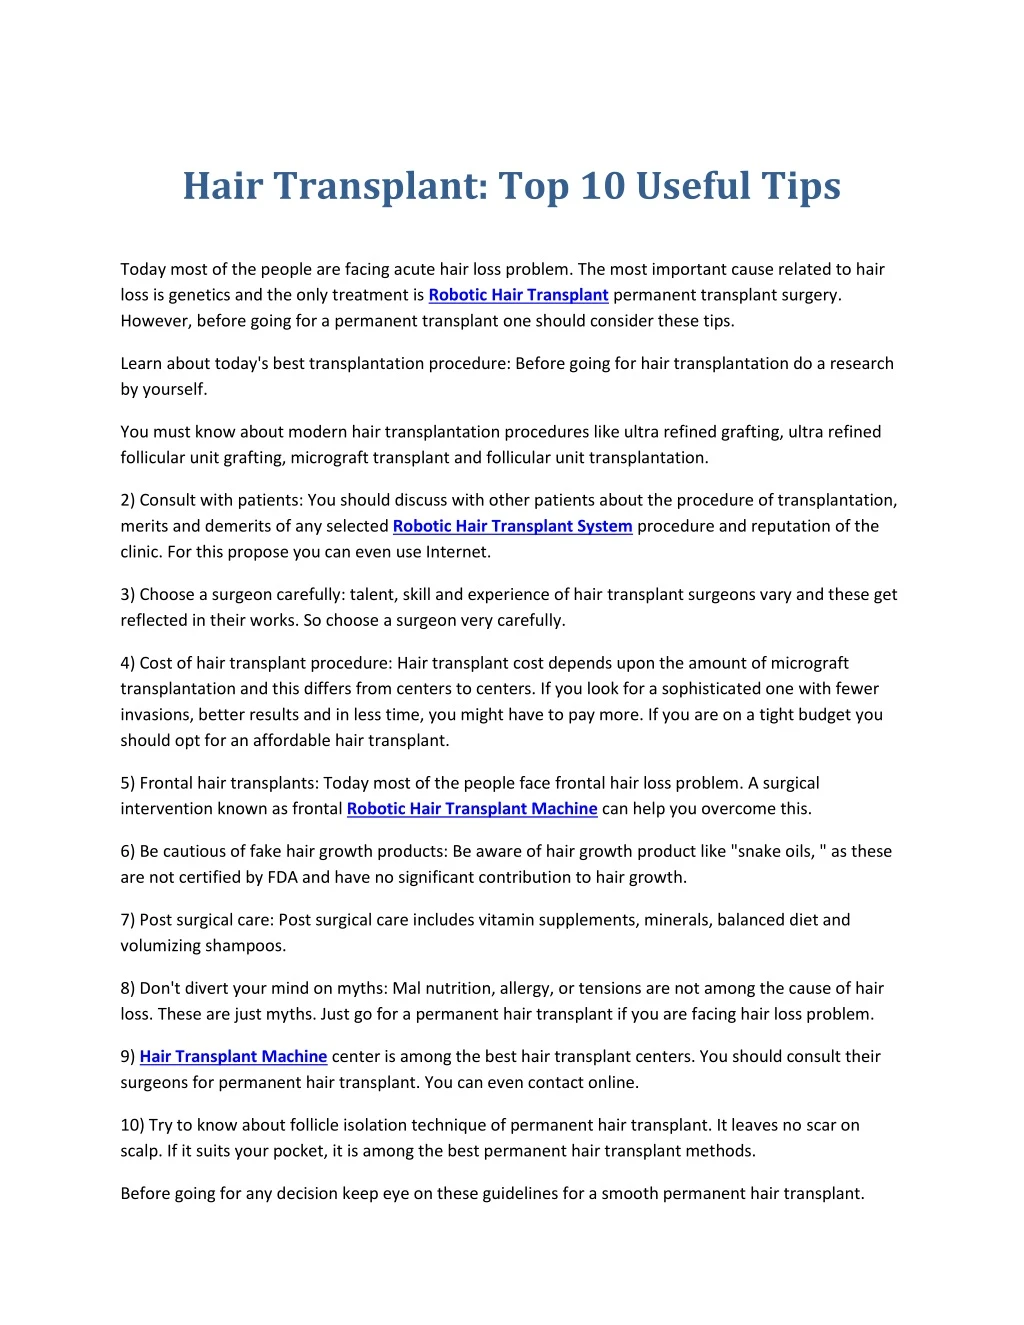 hair transplant top 10 useful tips